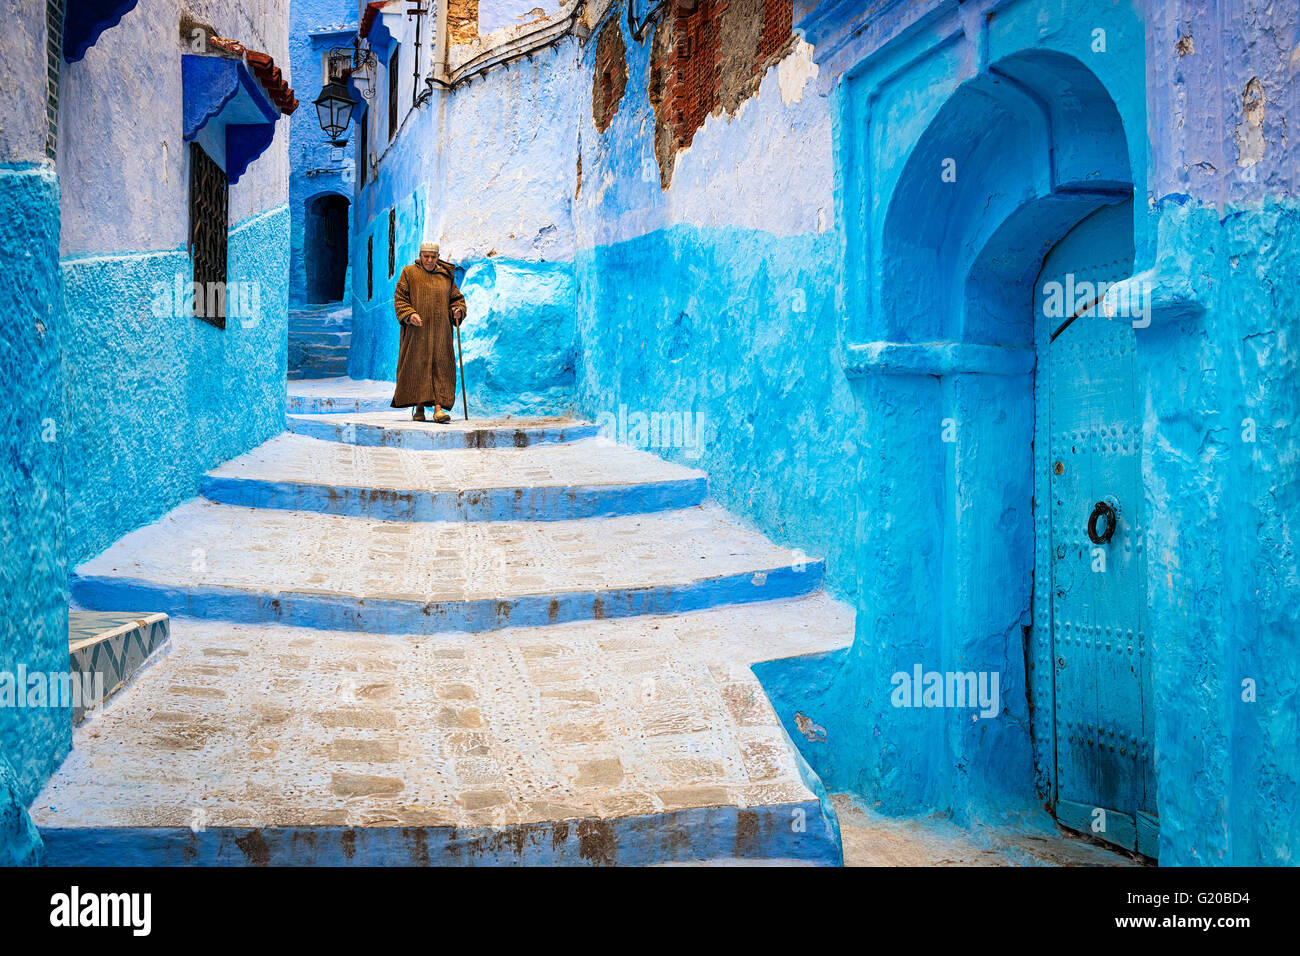 Chefchaouen, Morocco - April 10, 2016: An old man walking in a street of the town of Chefchaouen in Morocco. Stock Photo